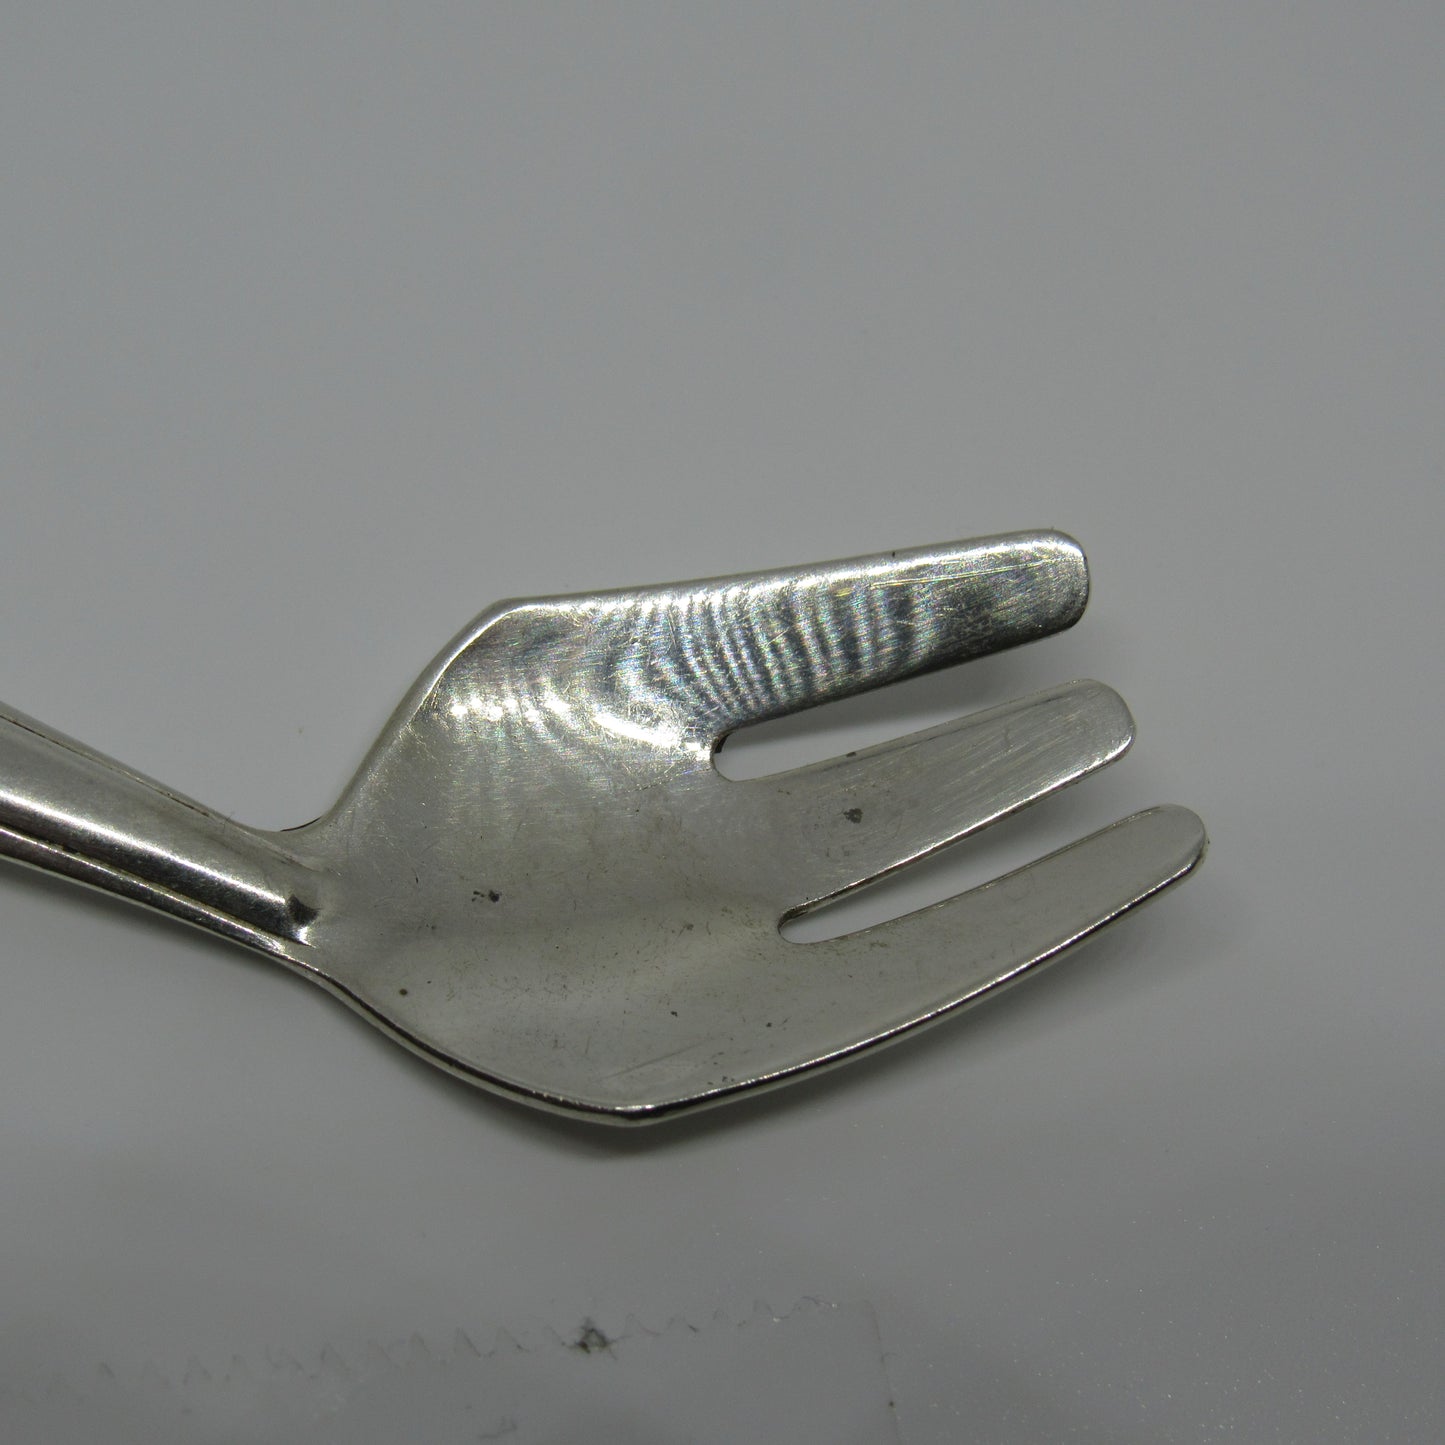 Lebkuecher & Co Sterling Silver Baby Fork - No Mono